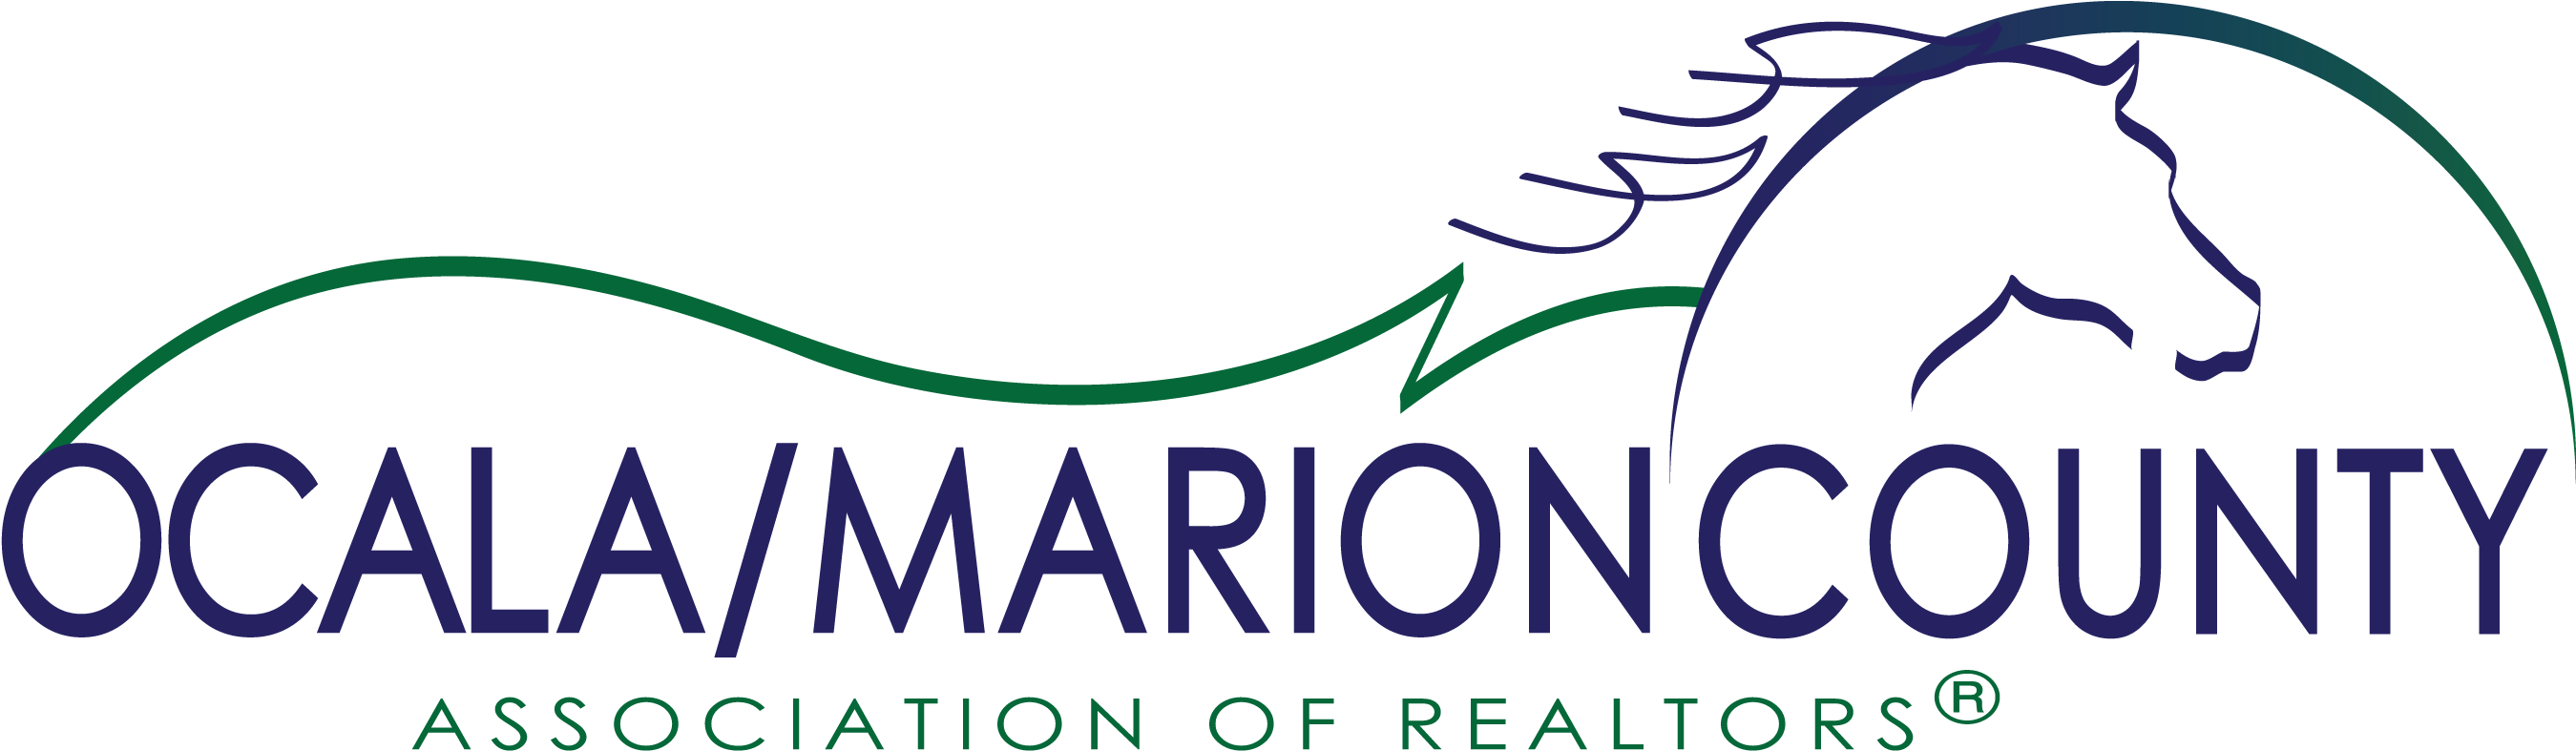 Ocala Marion County Associationof Realtors Logo PNG